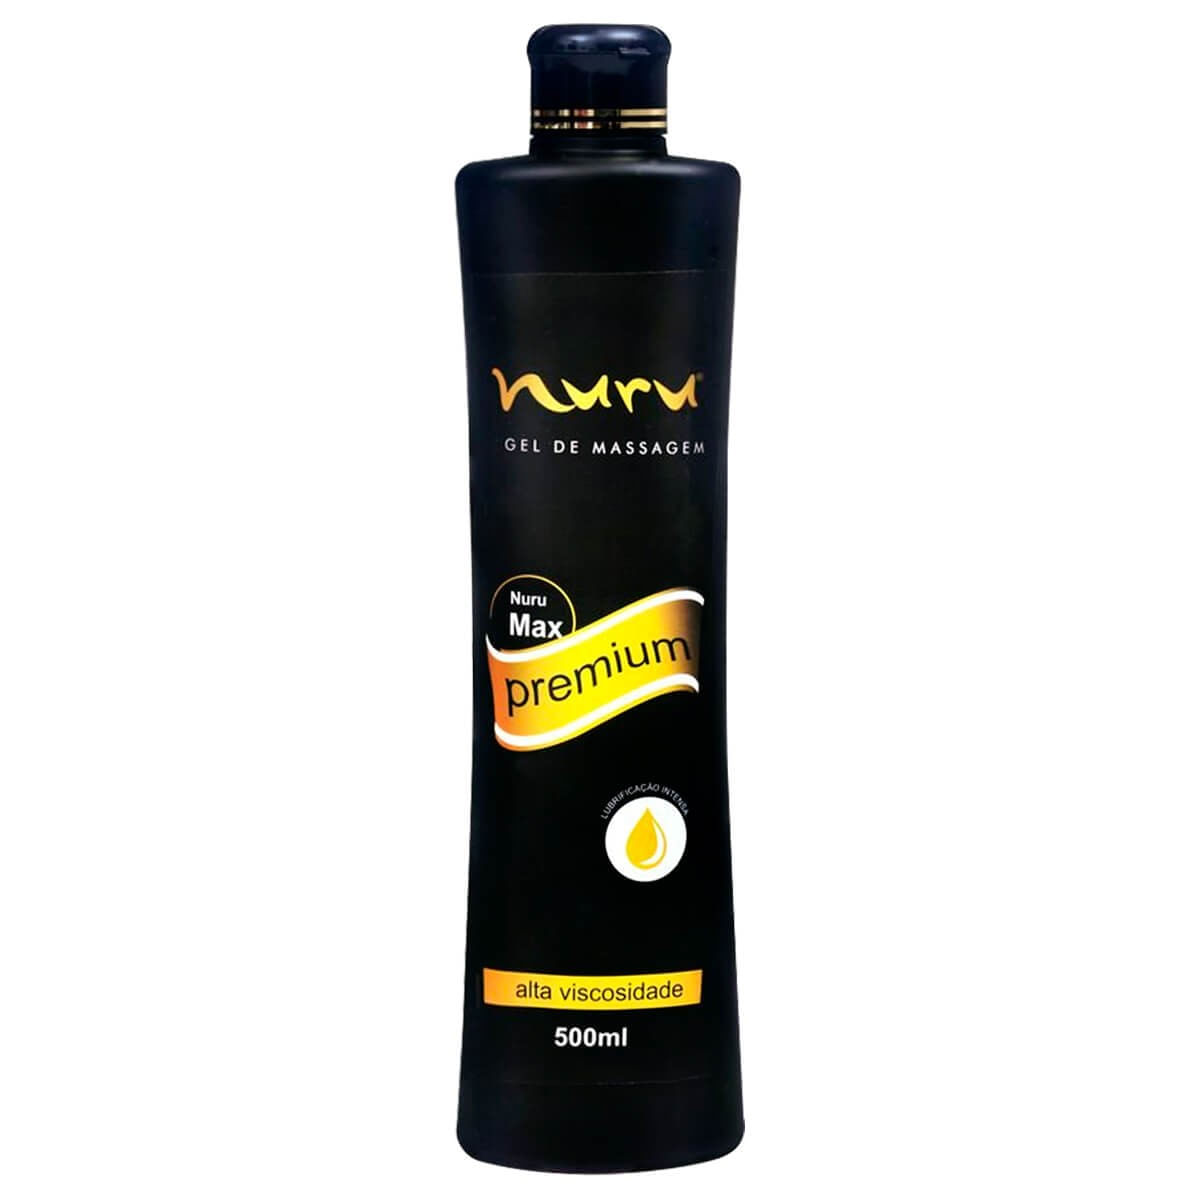 Nuru Premium Max Gel de Massagem Alta Viscosidade 500ml Nuru